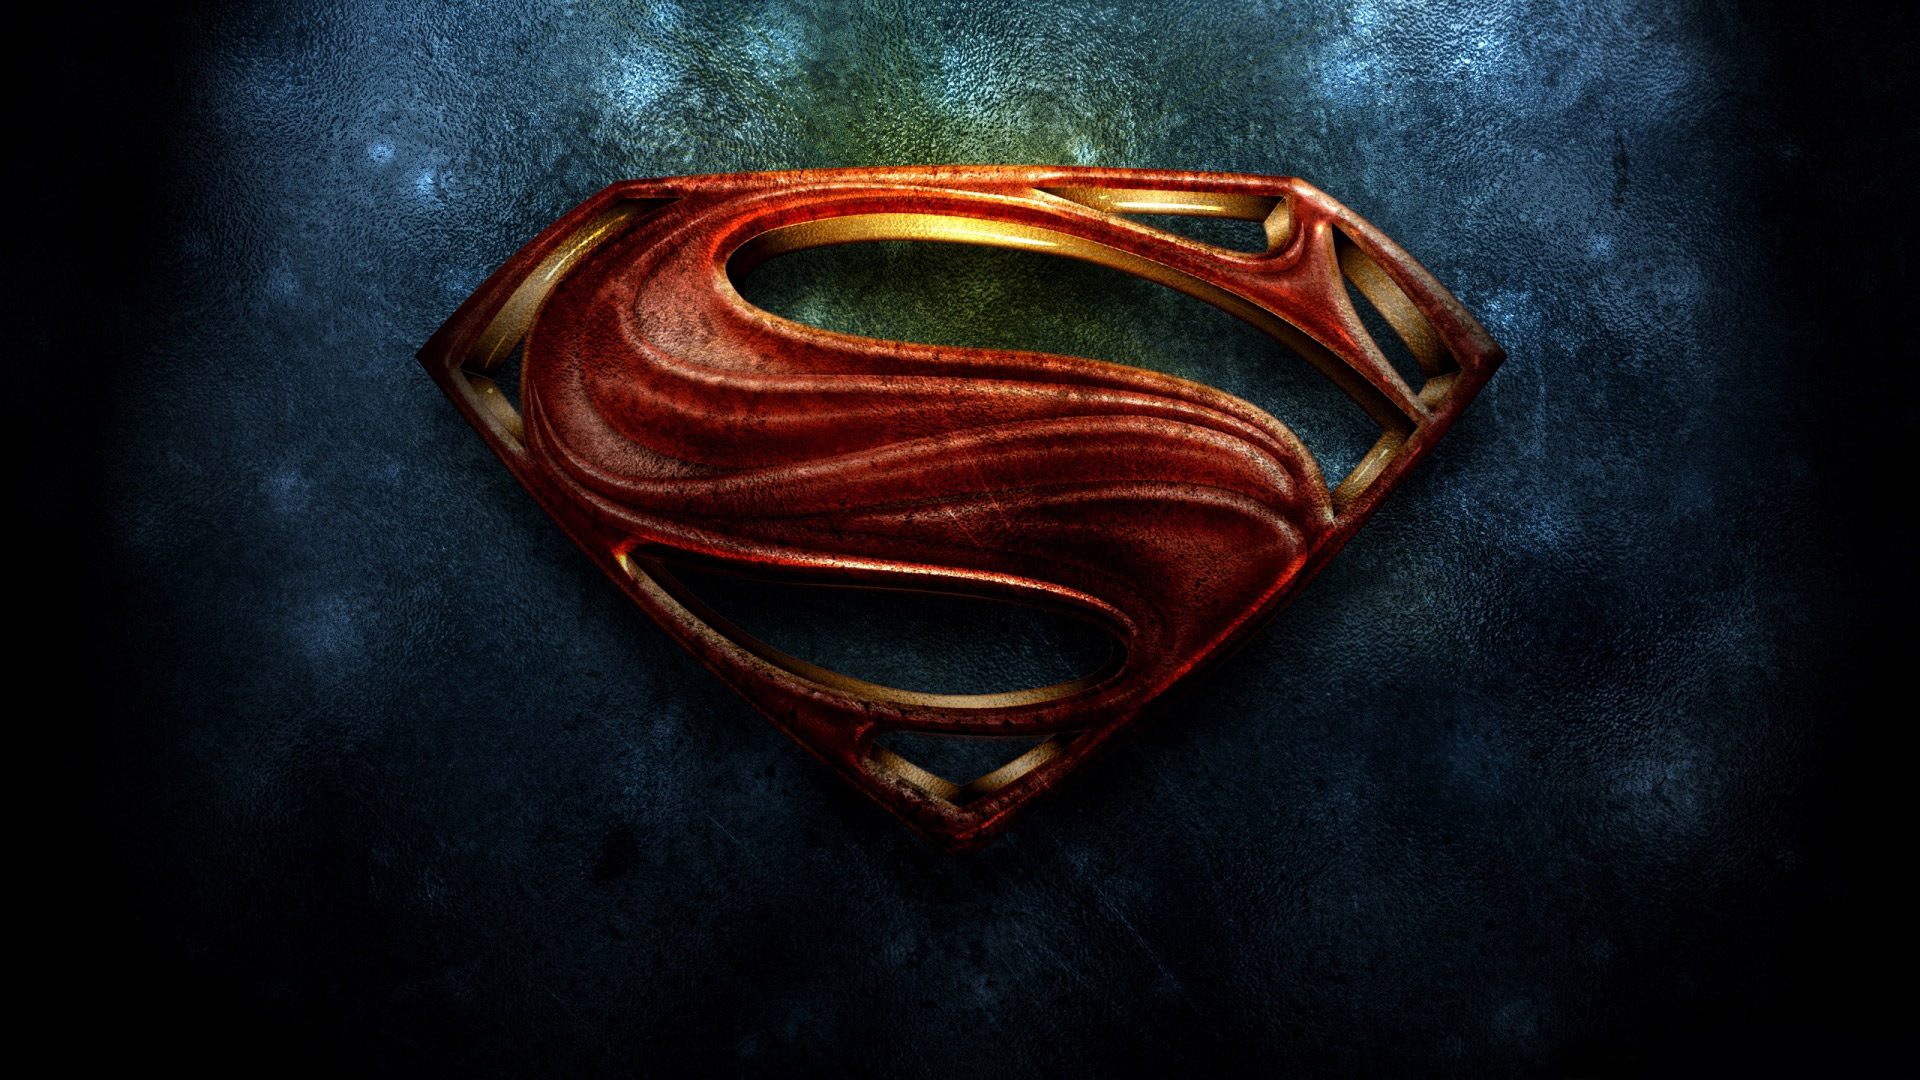 Superman Man Of Steel Movie Wallpaper HD